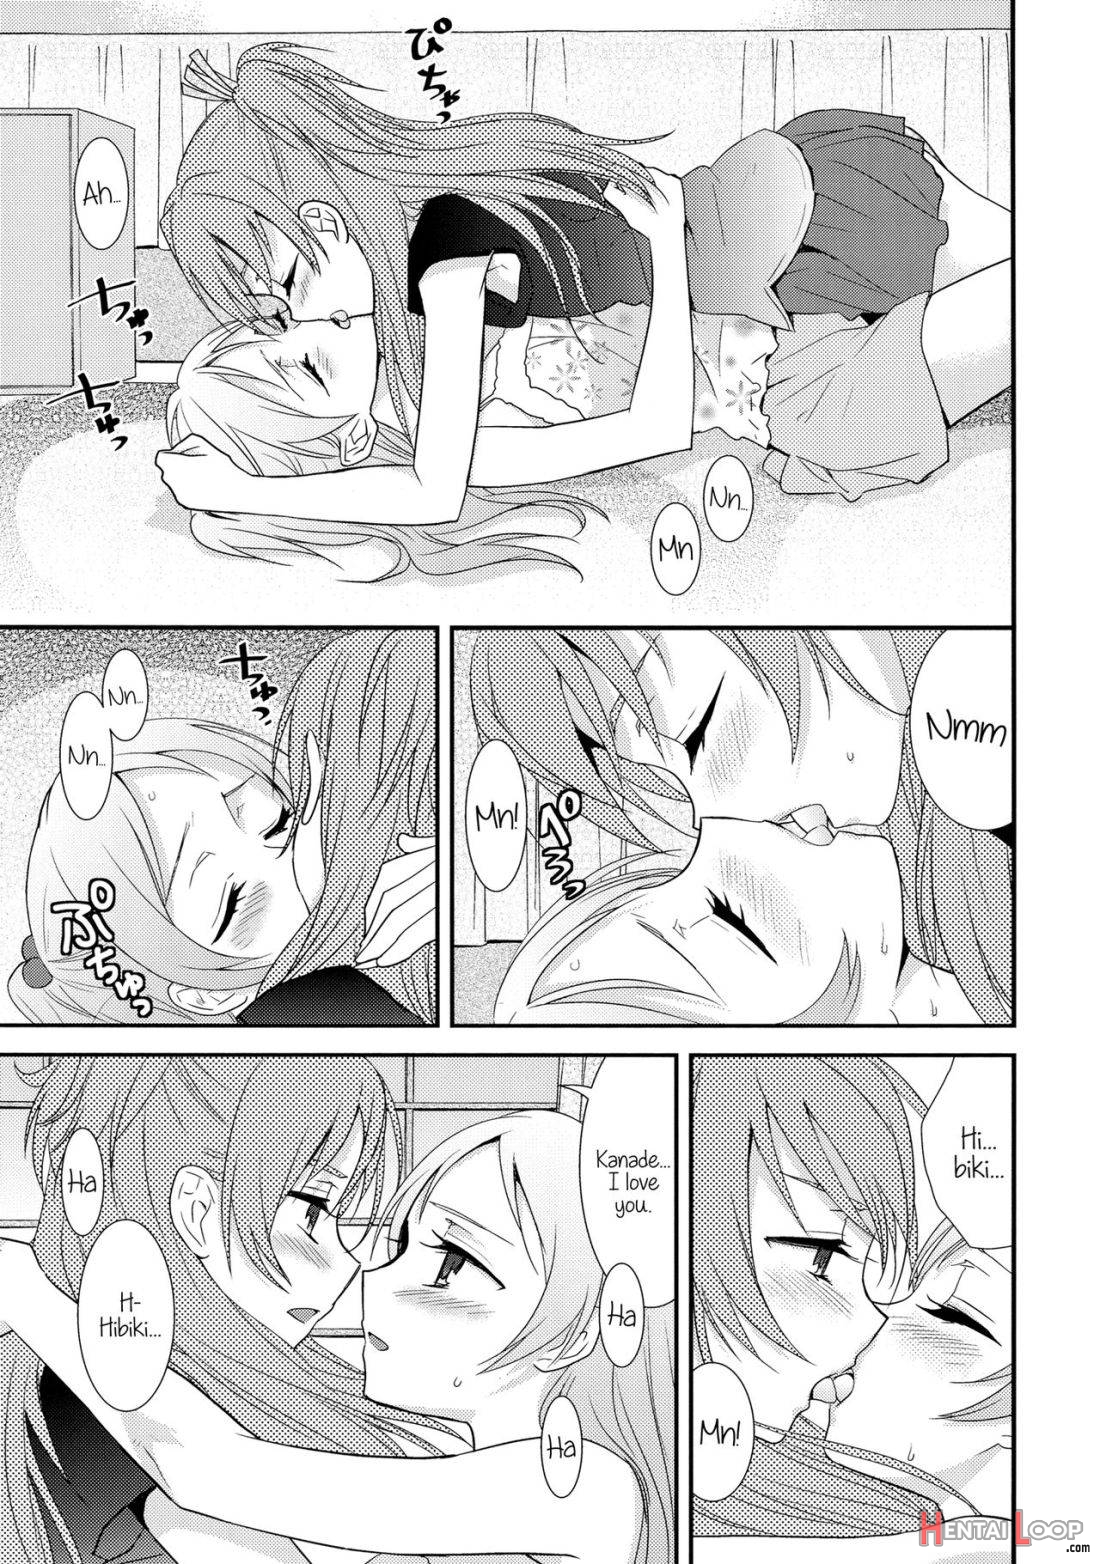 Yuri-cure!! page 6